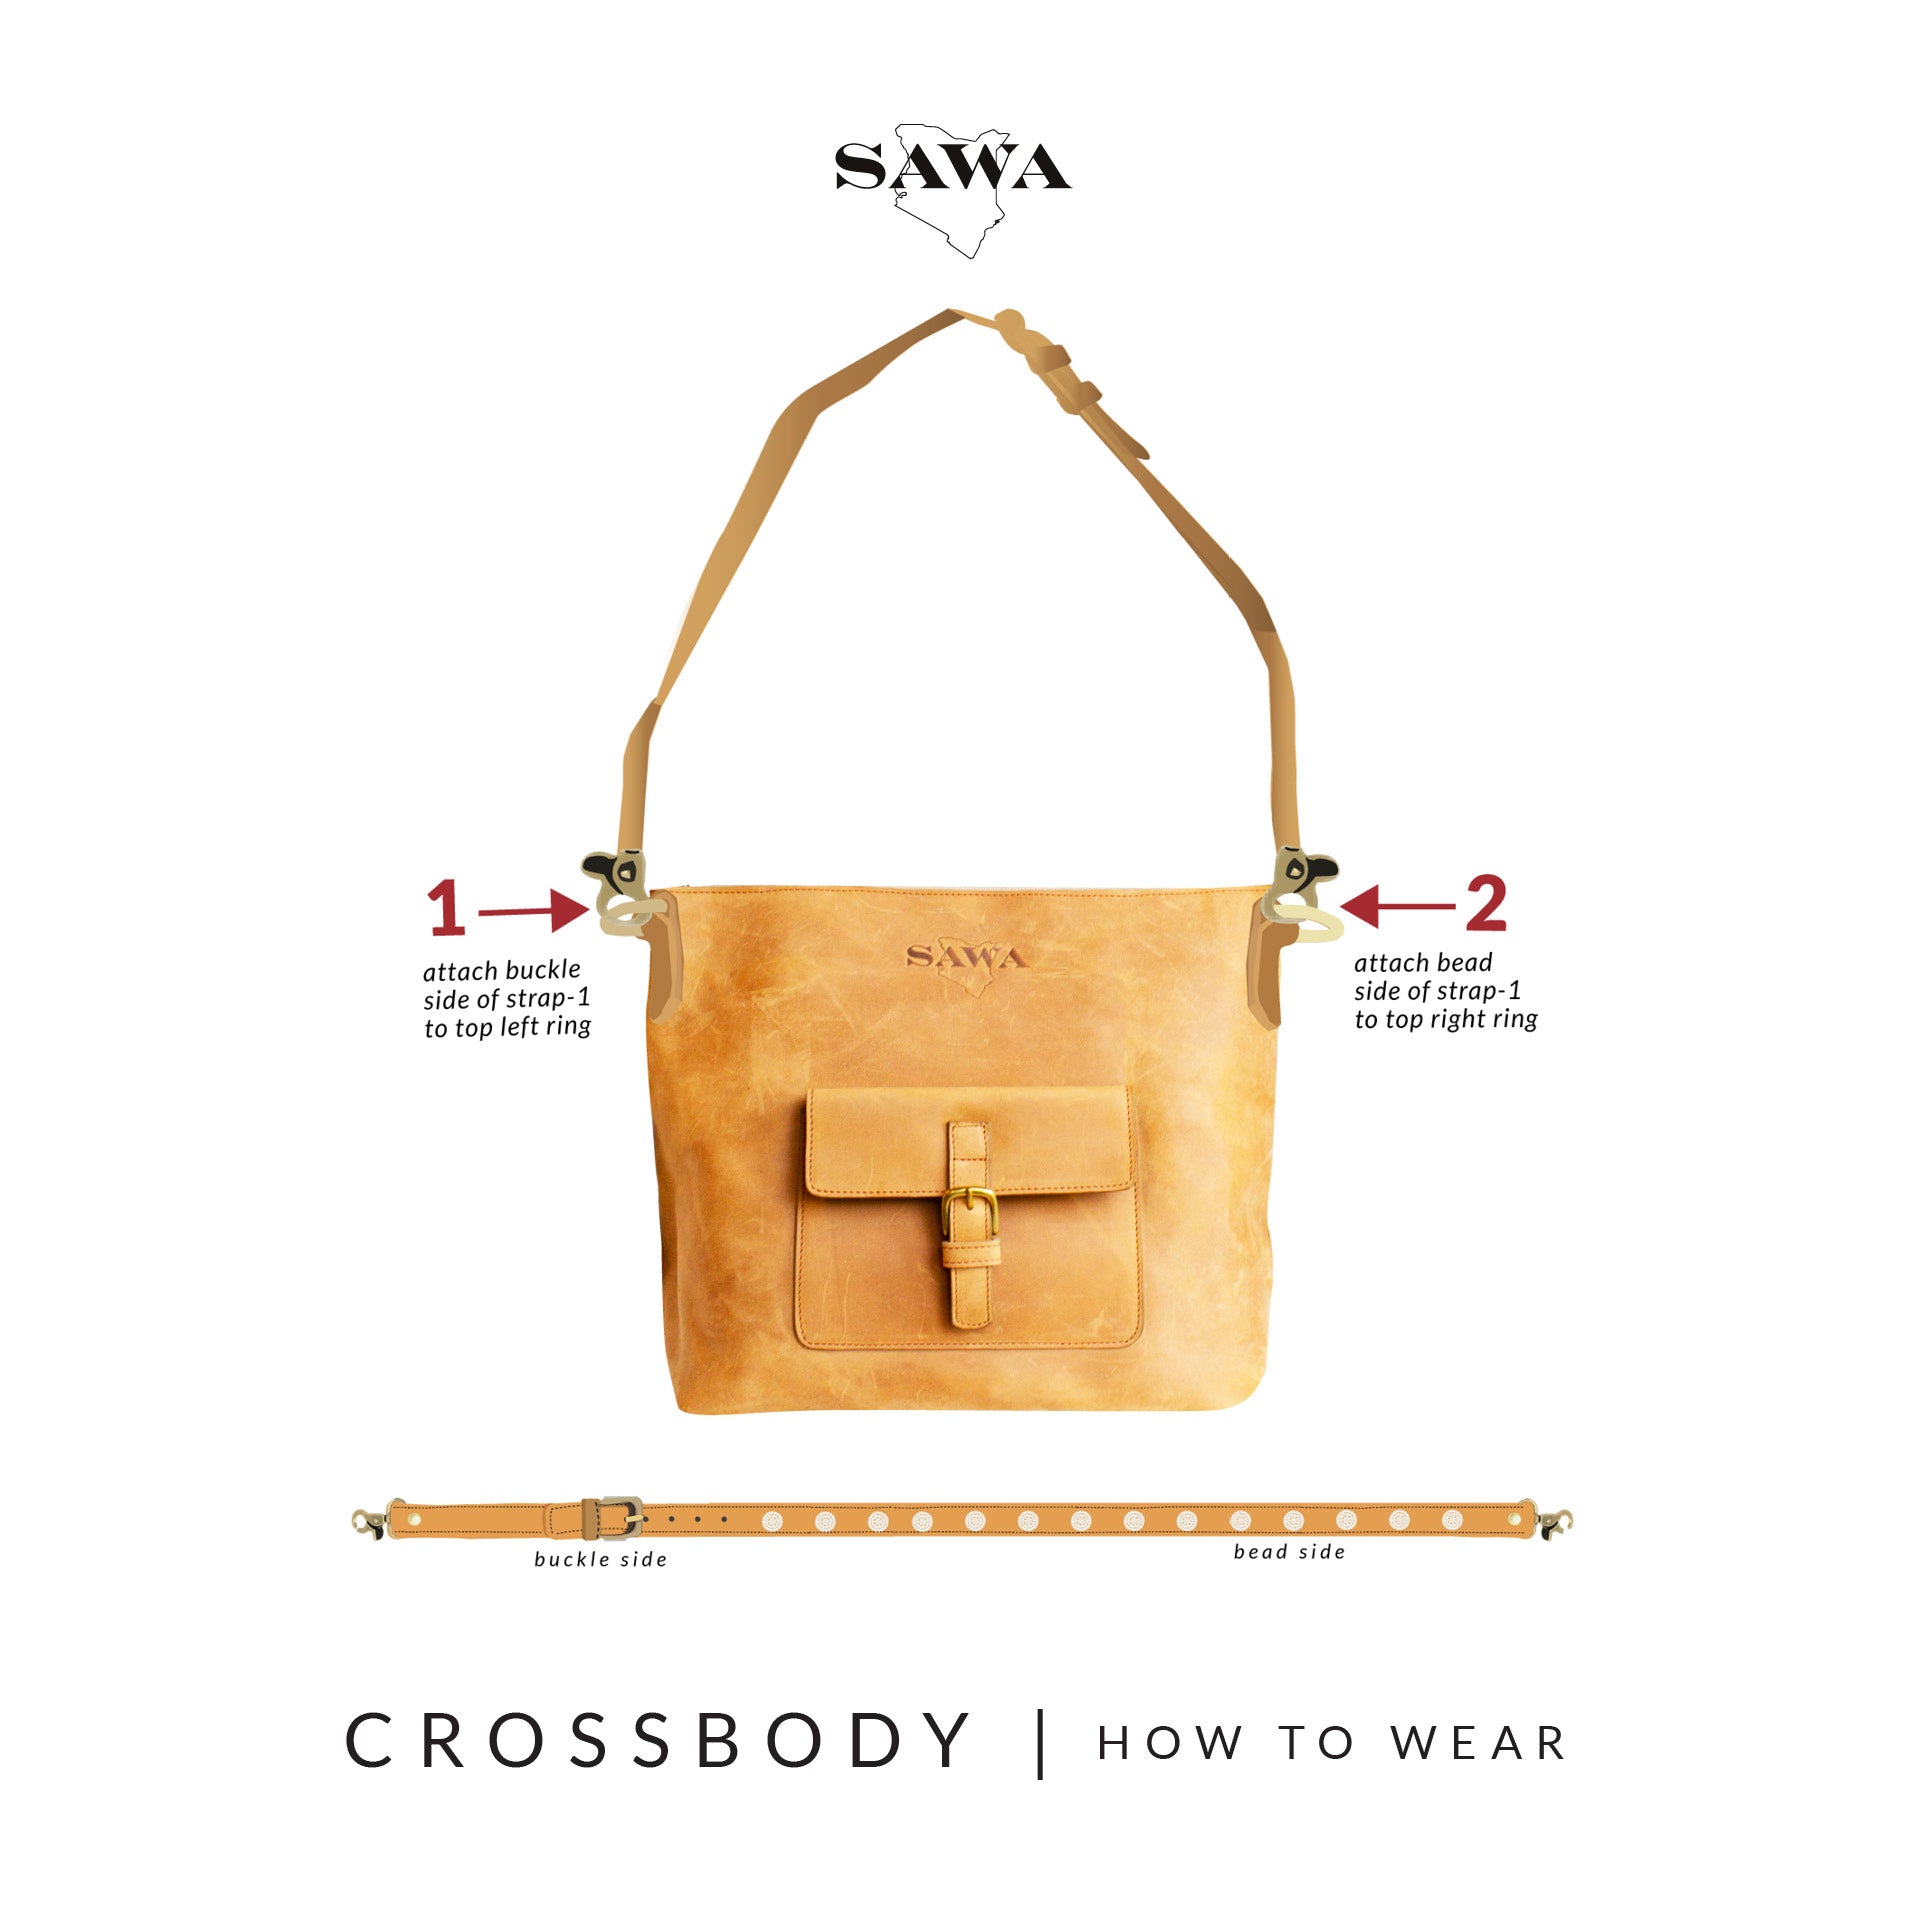 Crossbody / Messenger Bag Strap Instructions